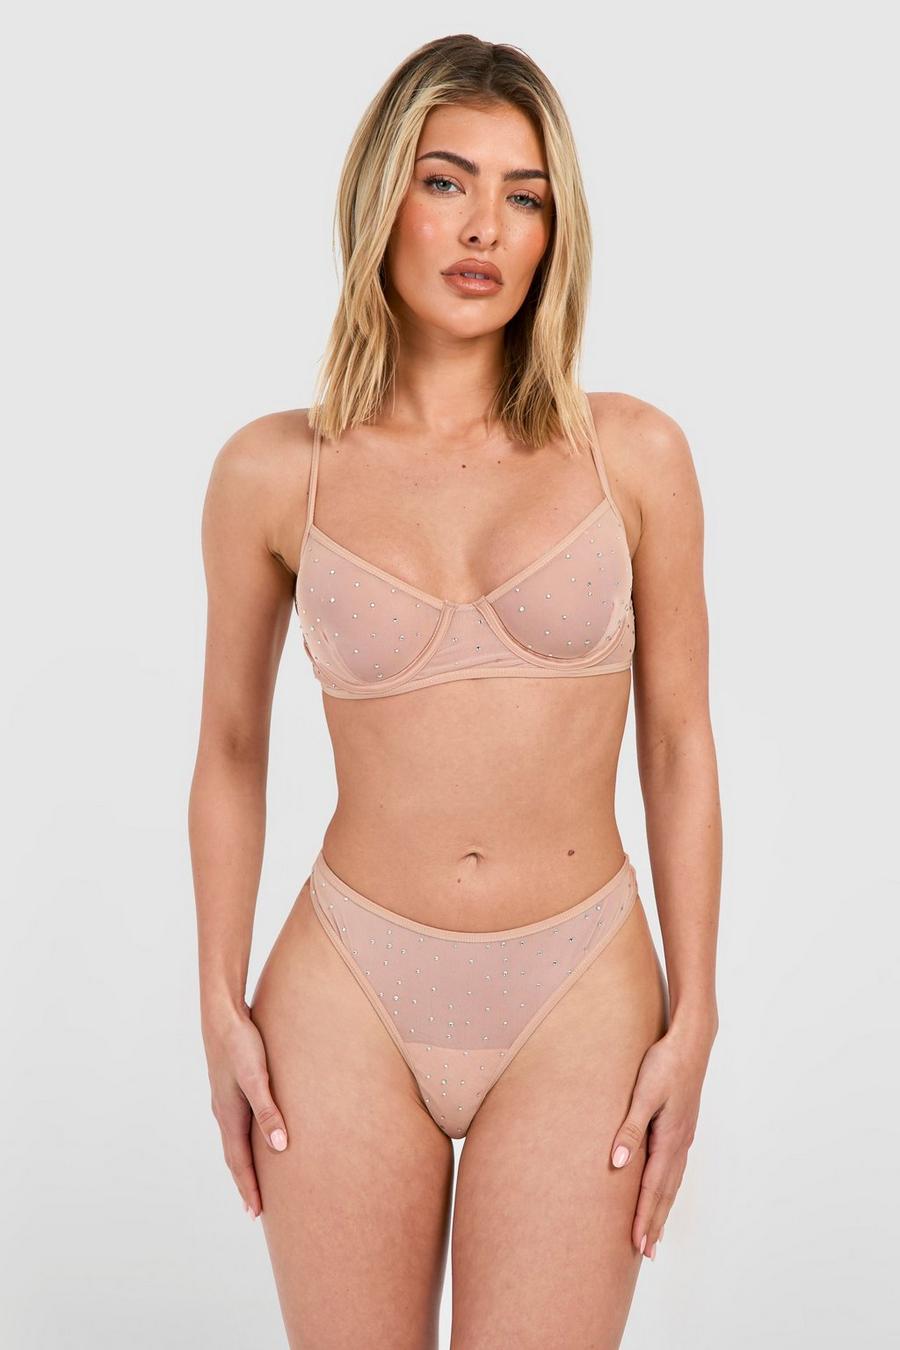 Buy Women's Bras Nude Lingerie Online